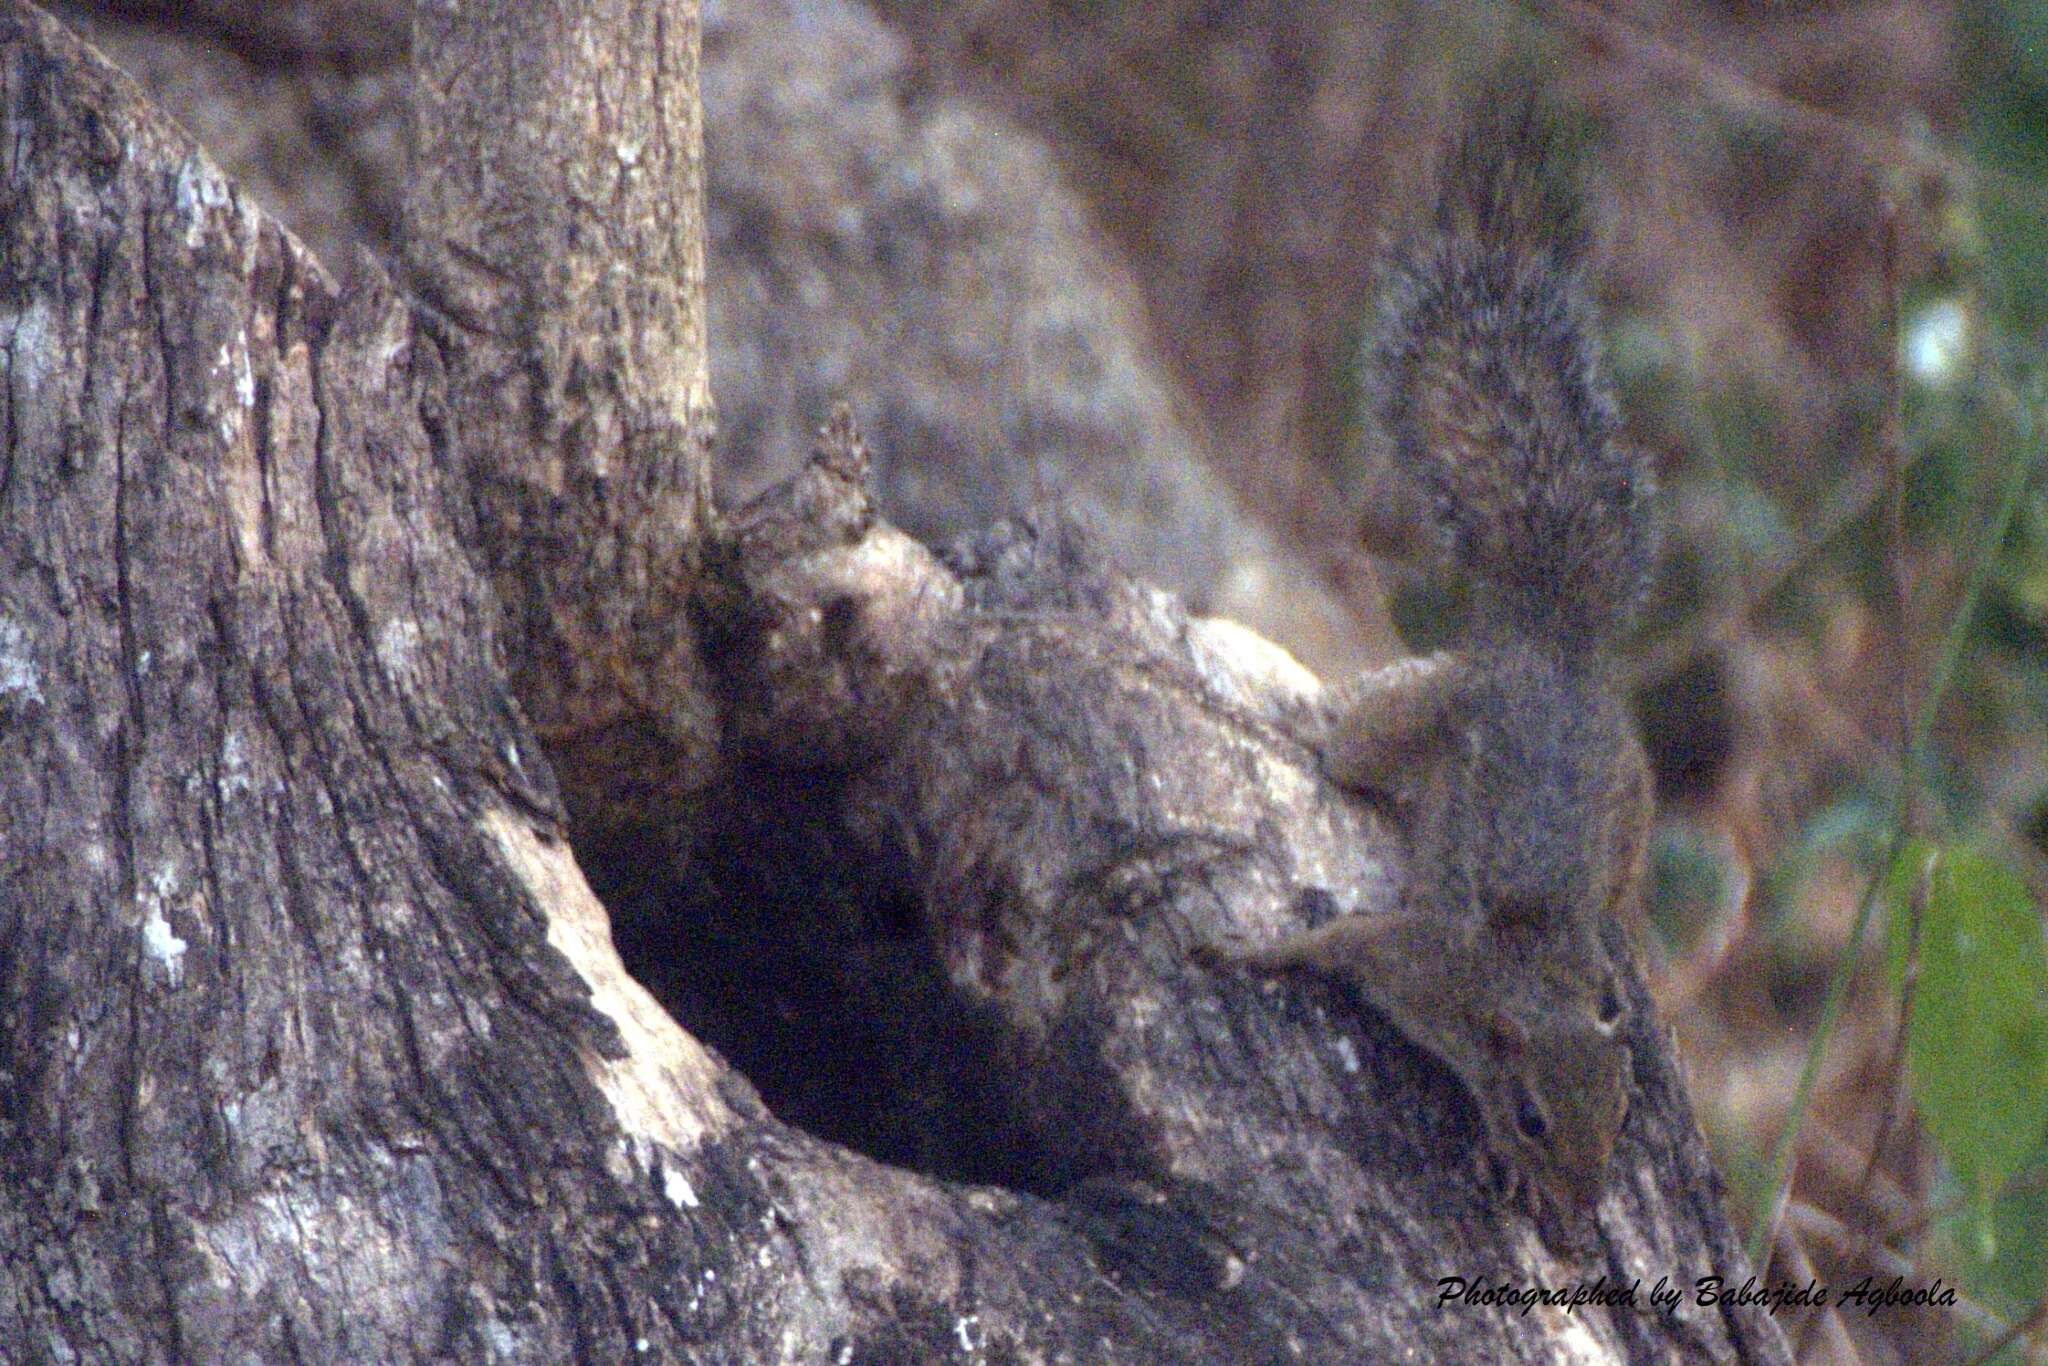 Image of Thomas's rope squirrel